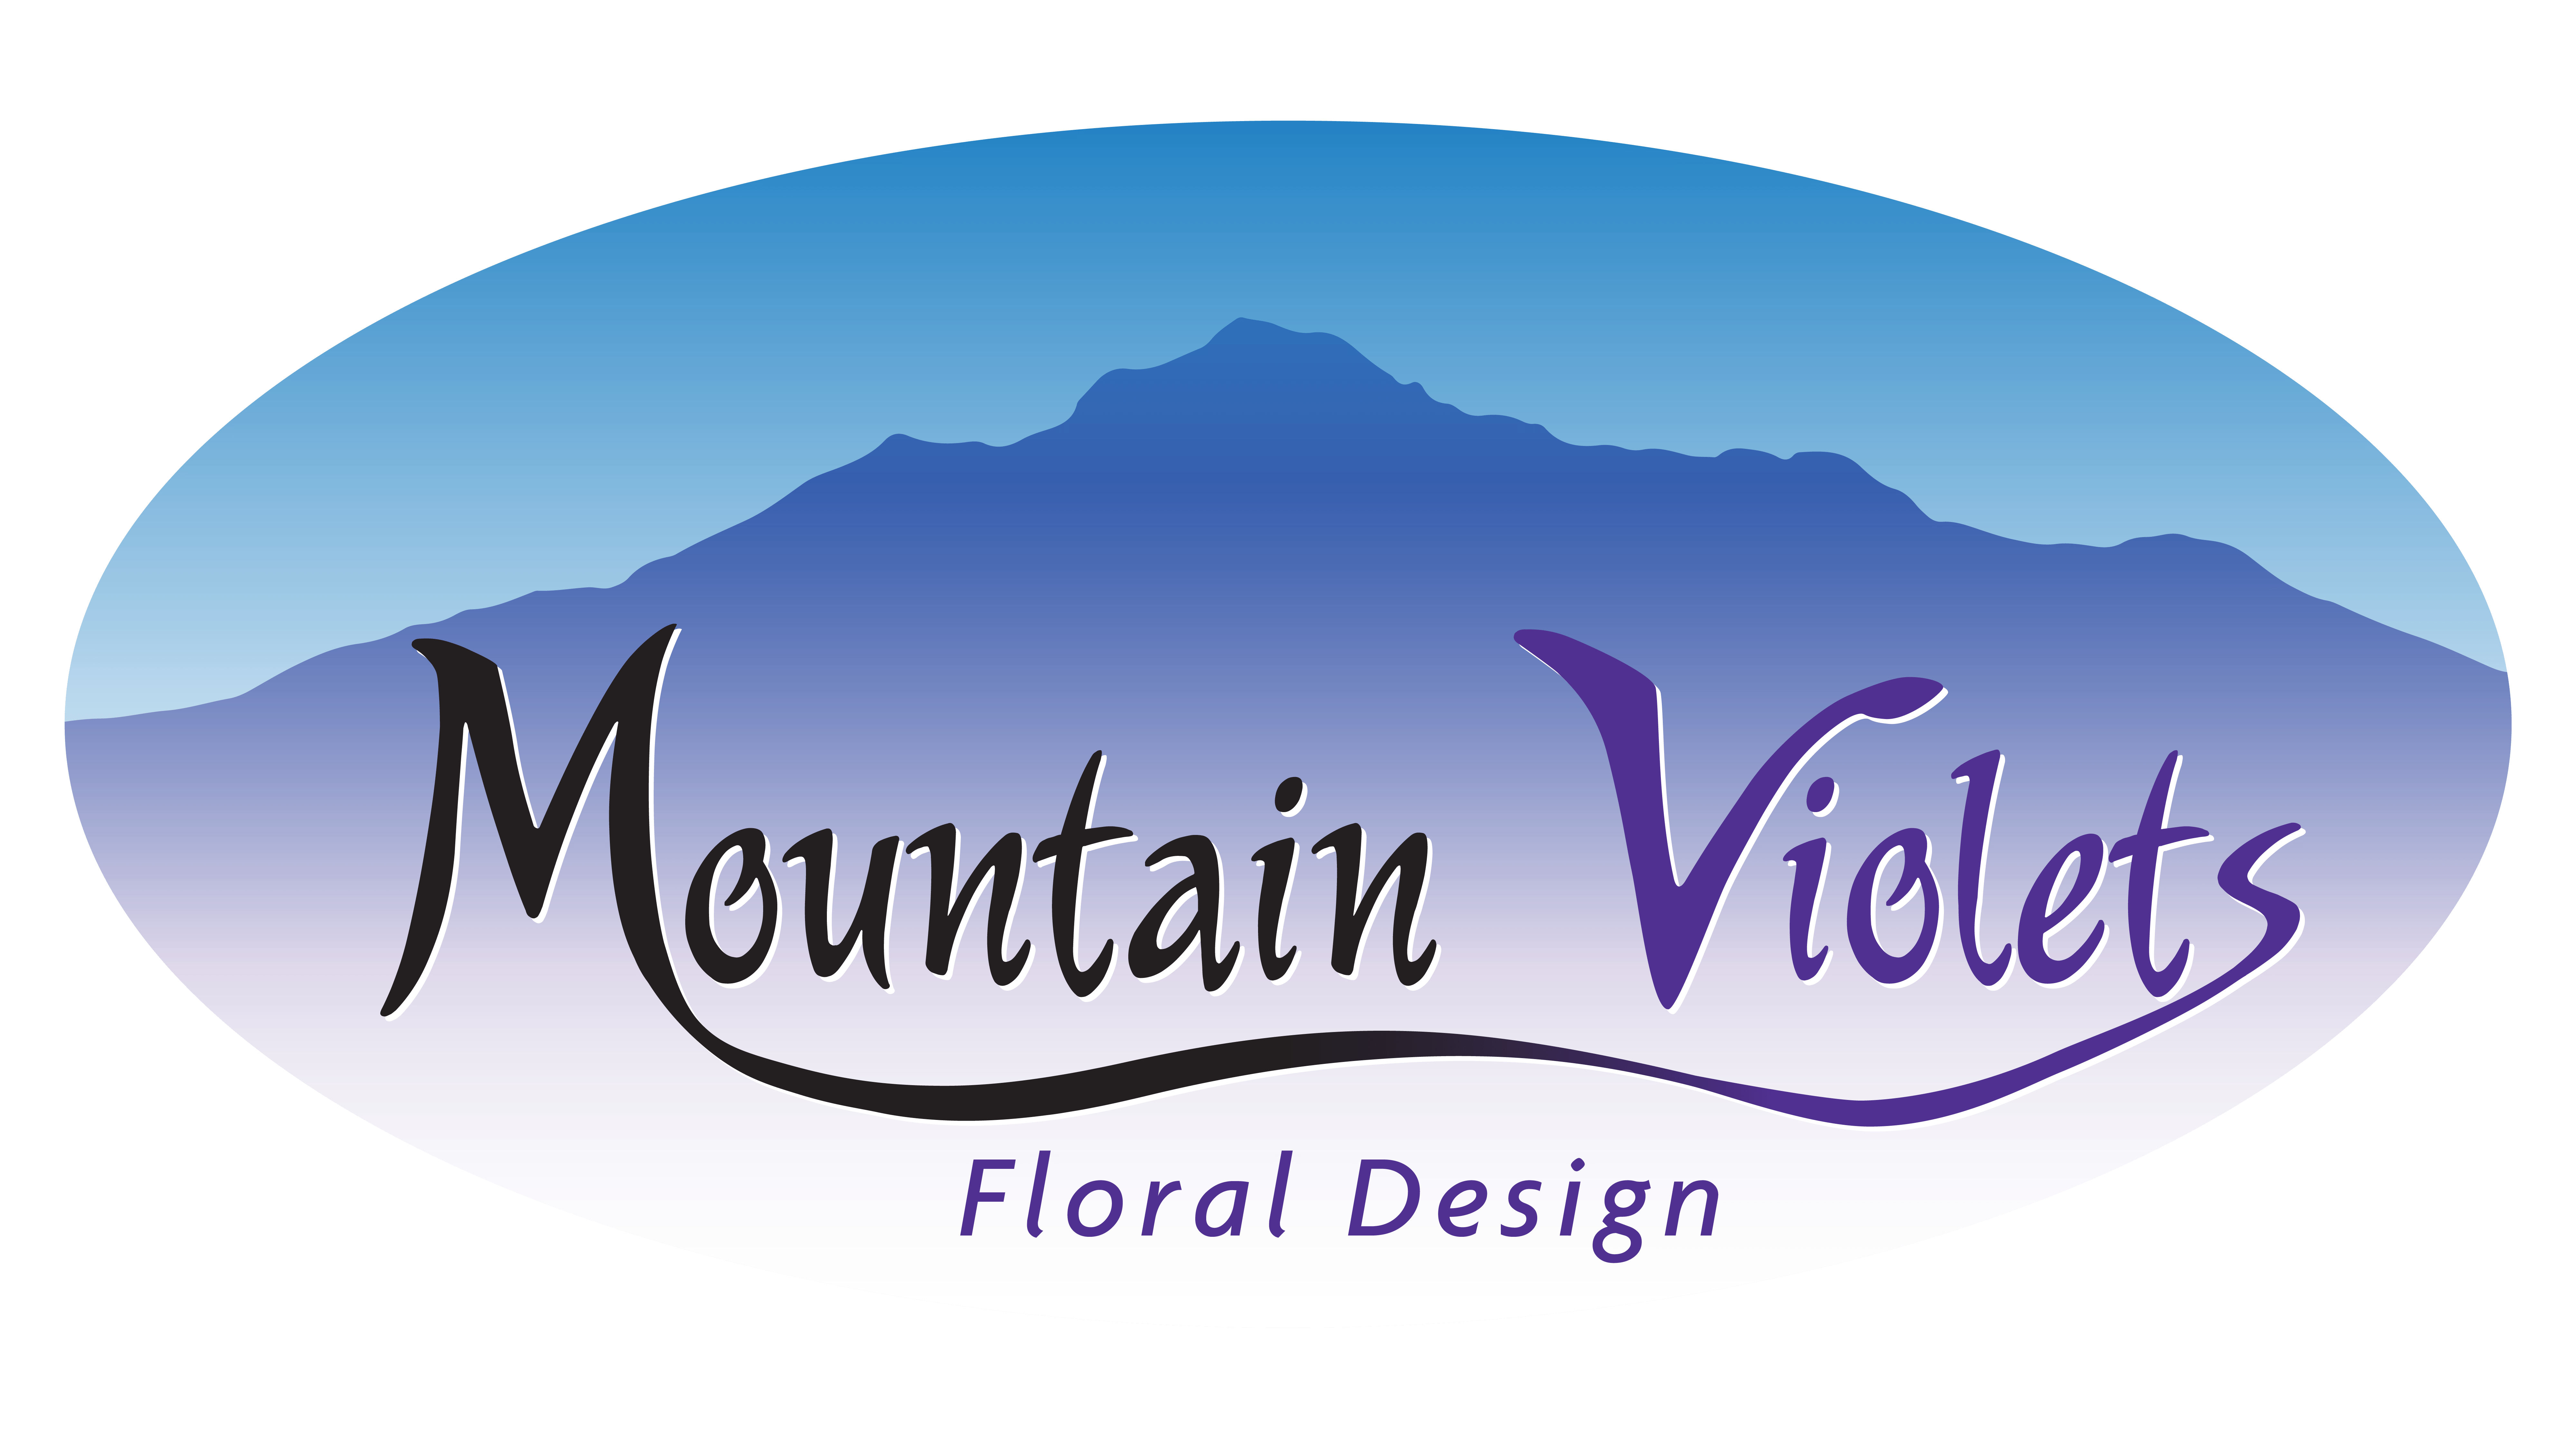 Blue Violets Logo - Mountain Violets – Welcome to Mountain Violets Floral Design